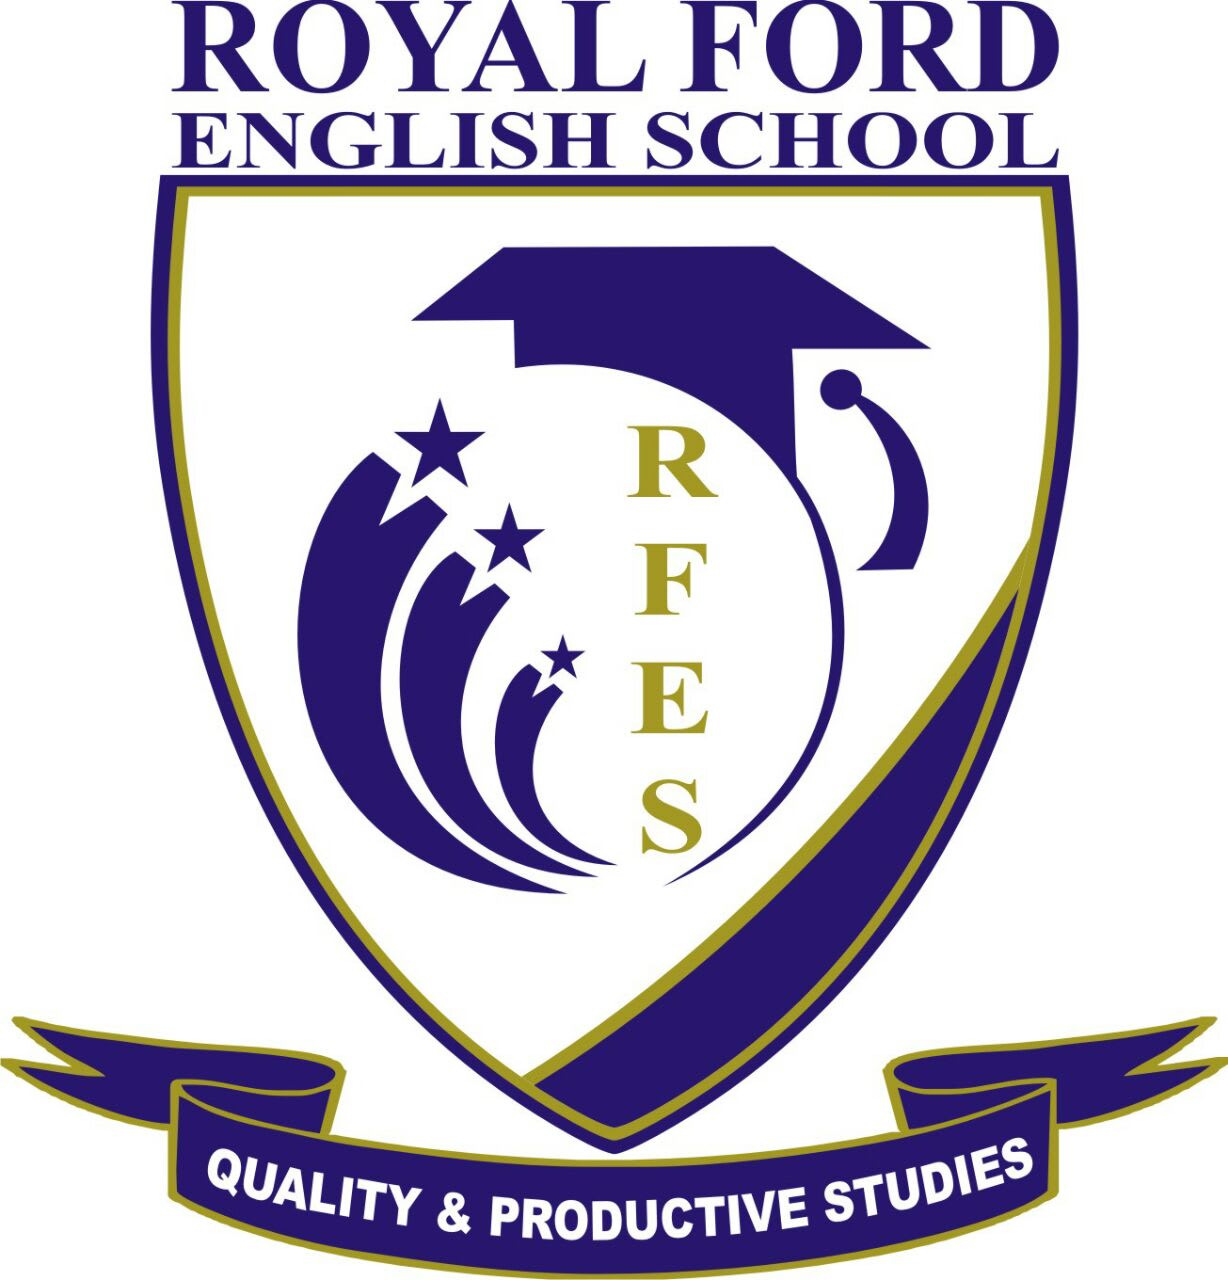 Royal Ford English School